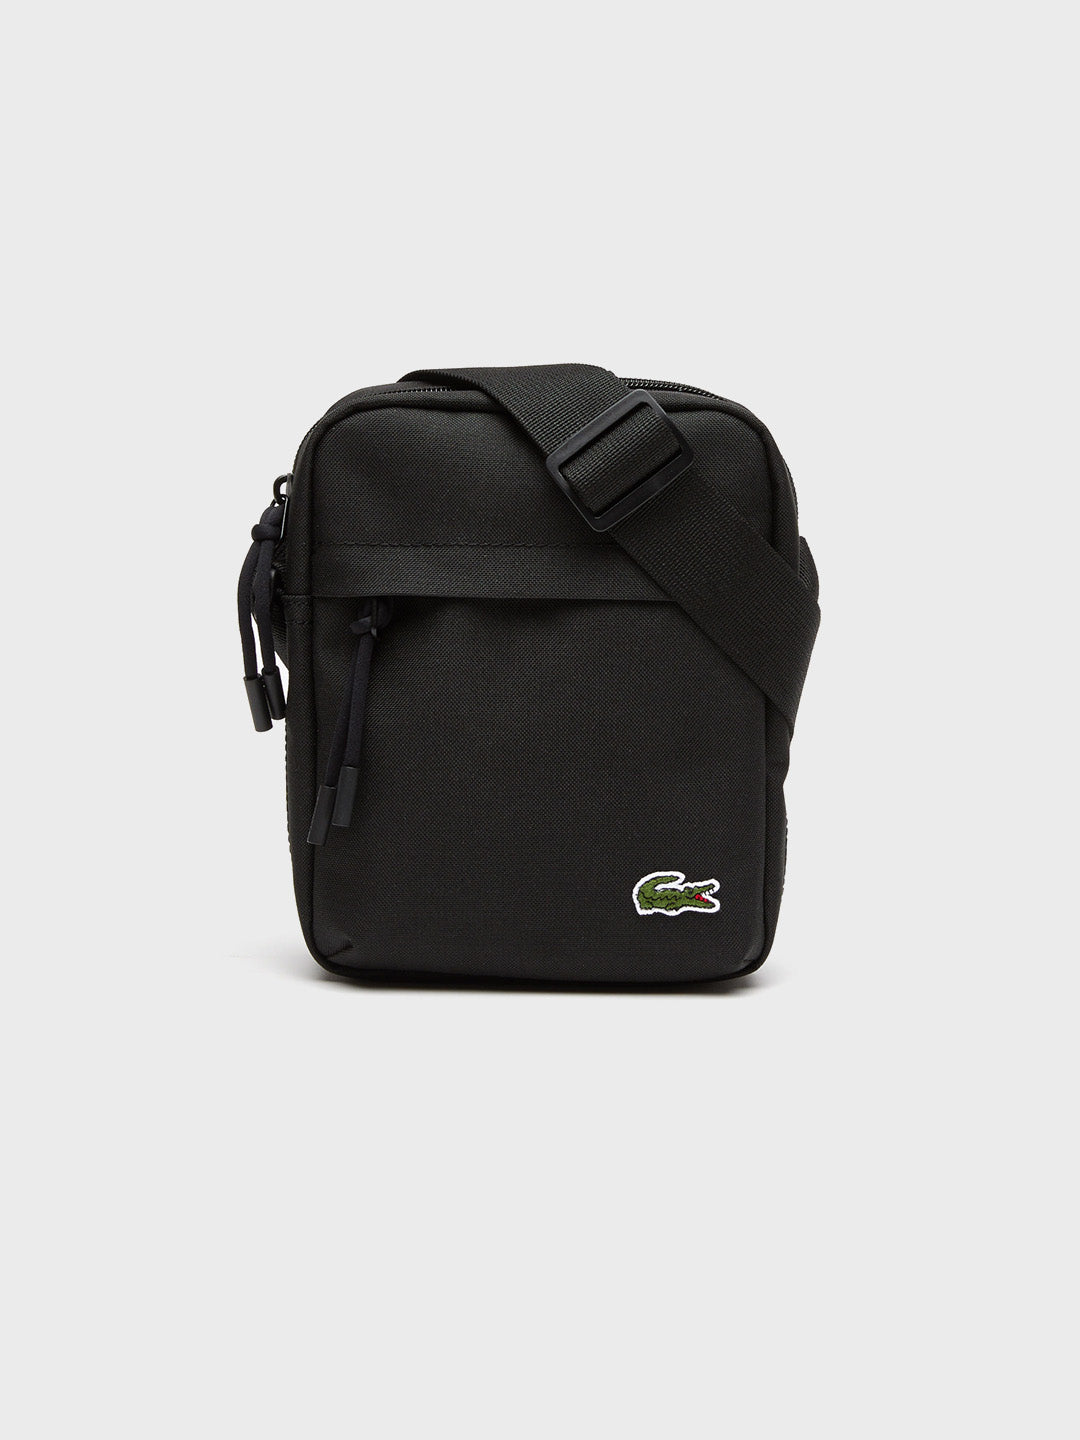 Lacoste crossover bag black